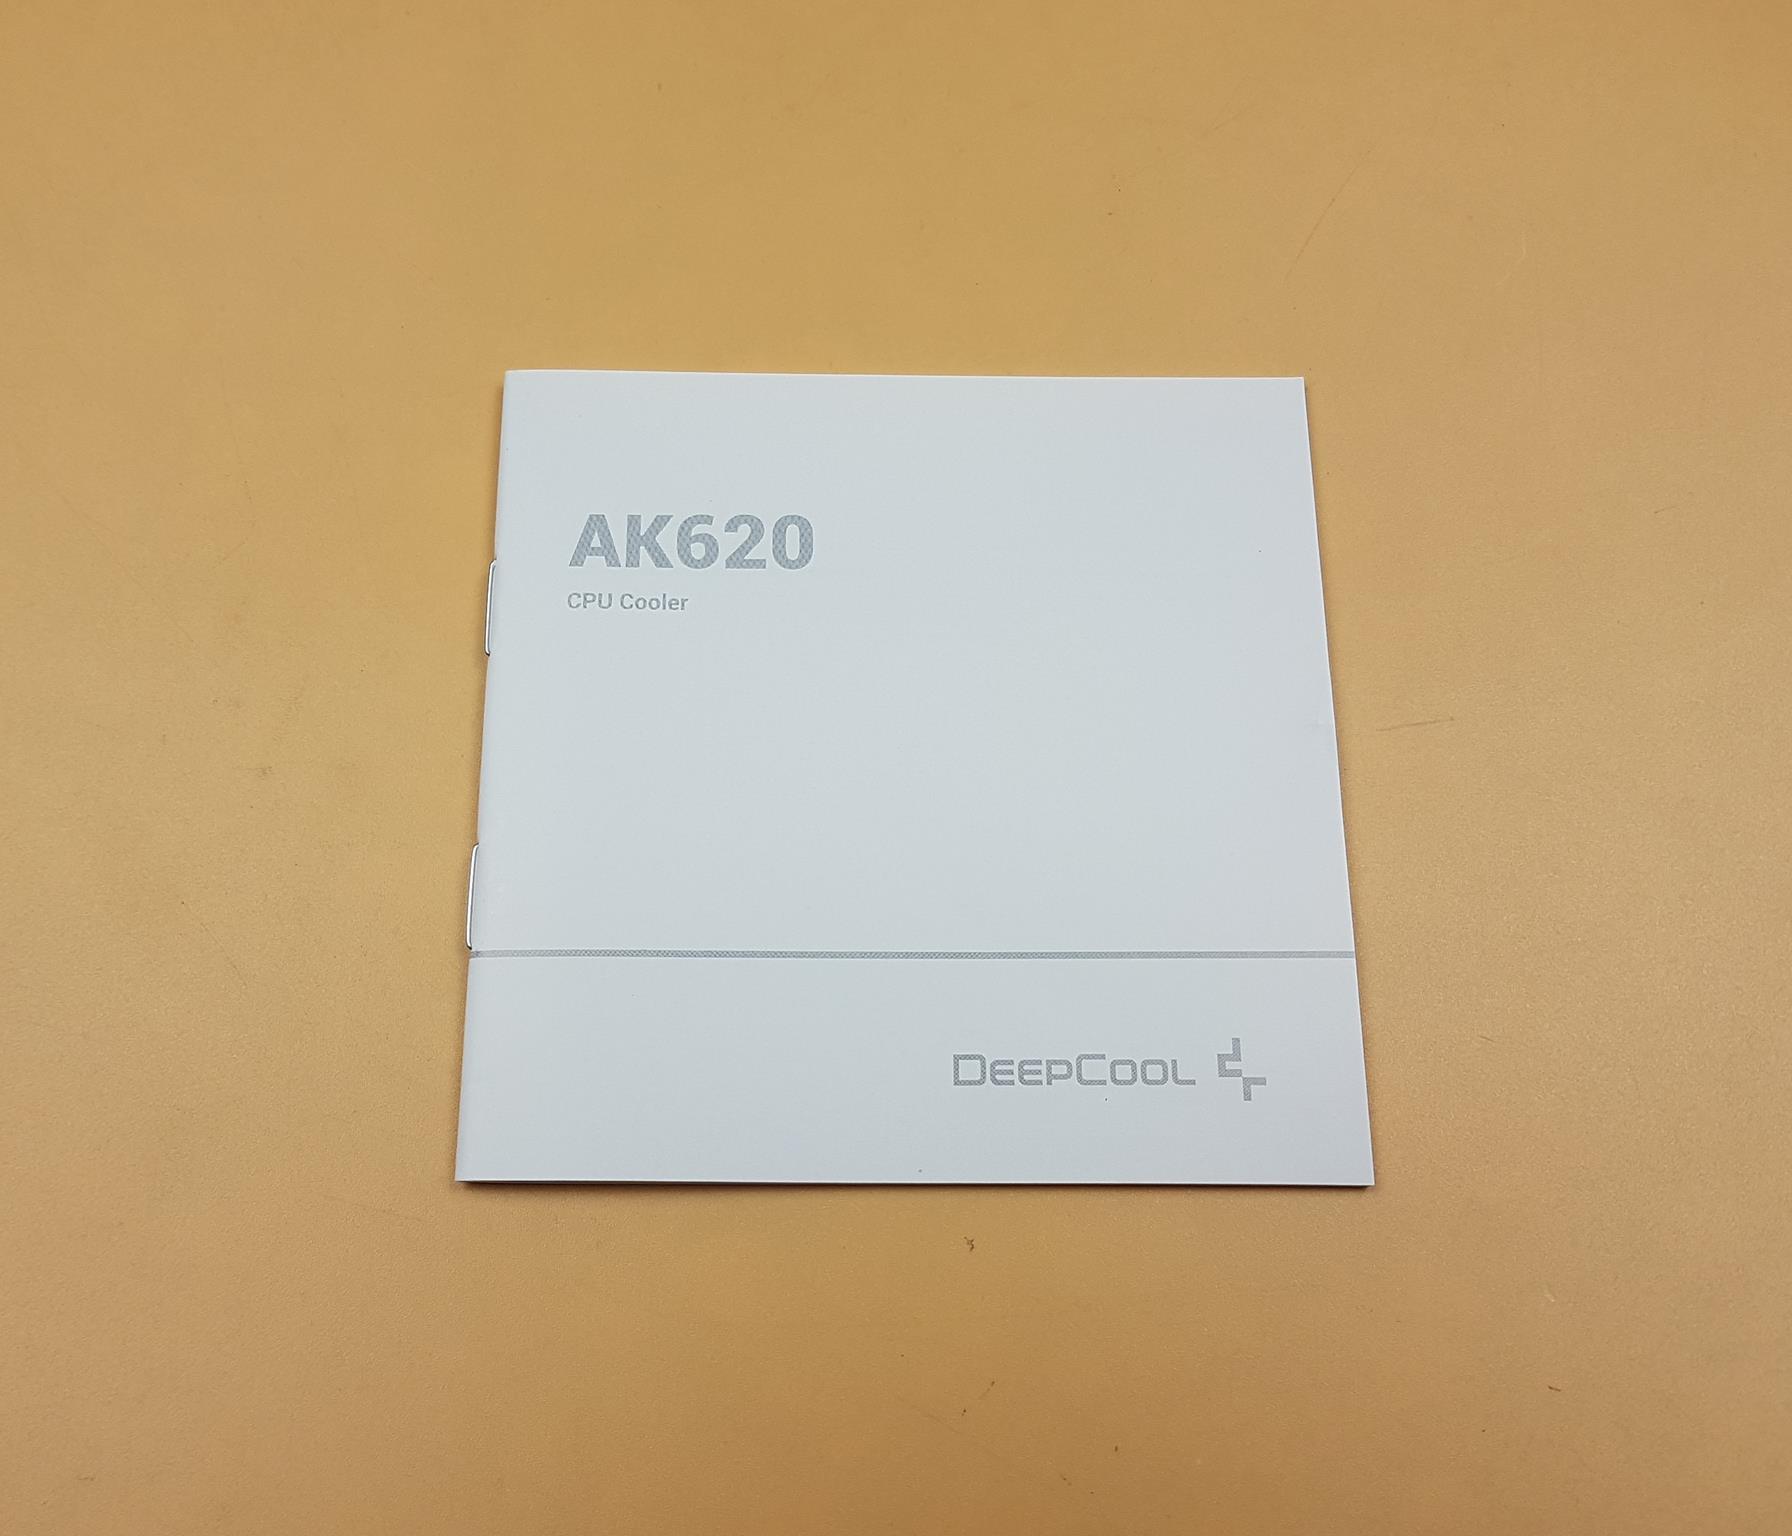 DeepCool AK620 Unboxing